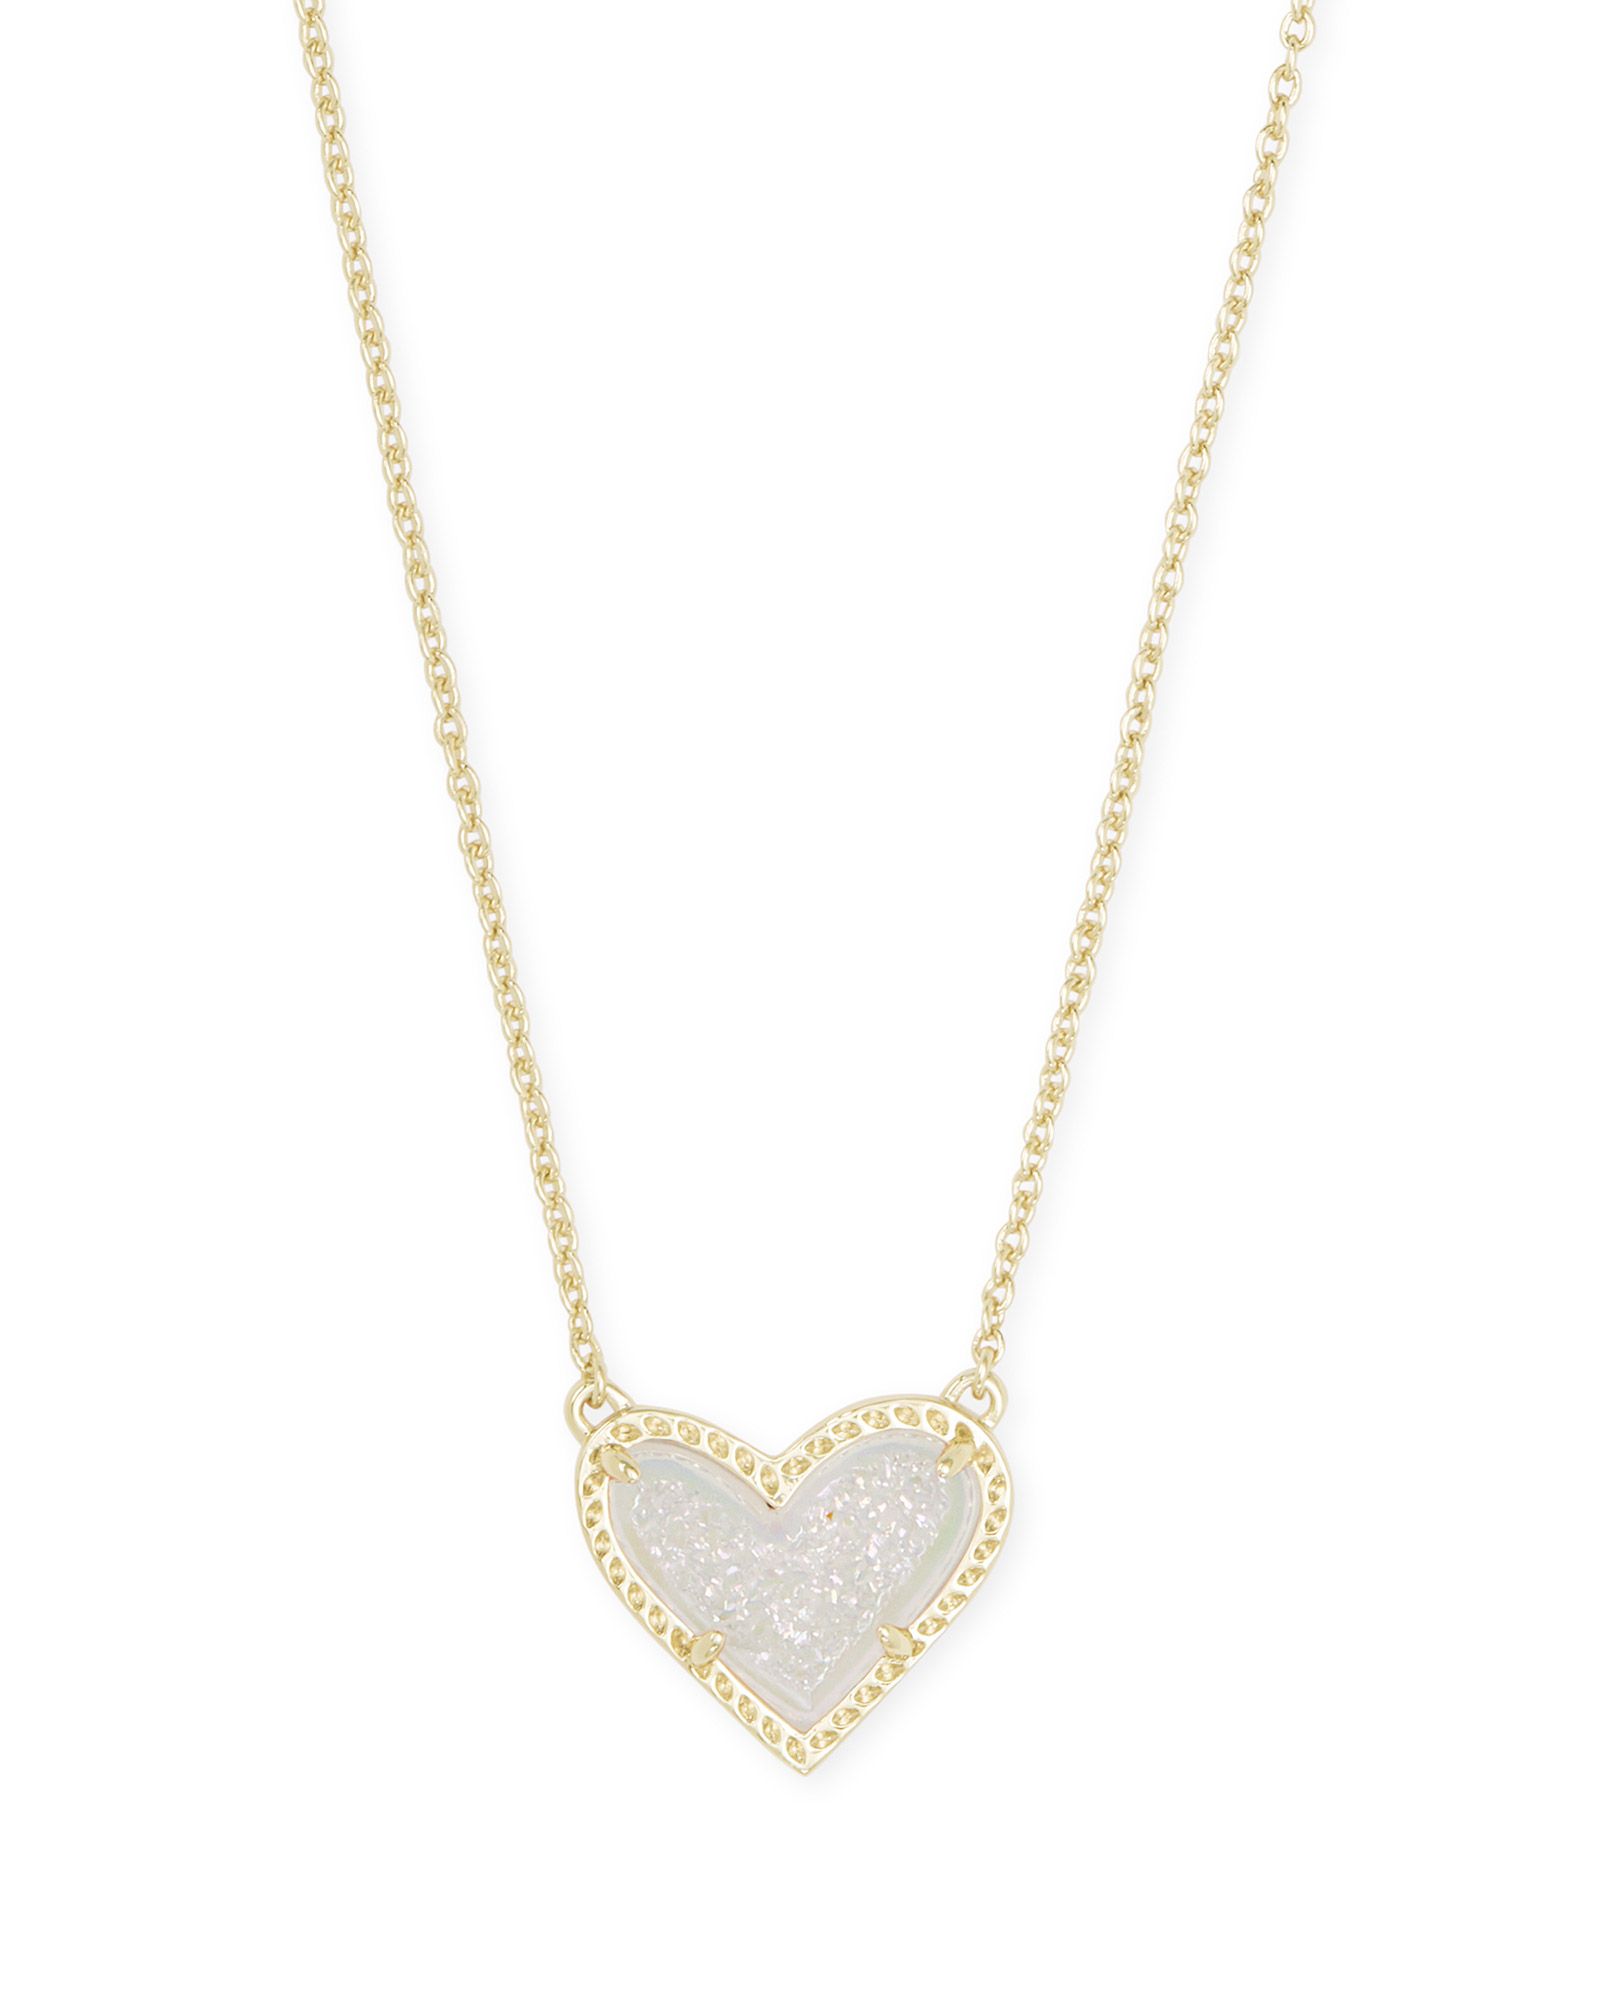 Ari Heart Gold Extended Length Pendant Necklace in Iridescent Drusy | Kendra Scott | Kendra Scott